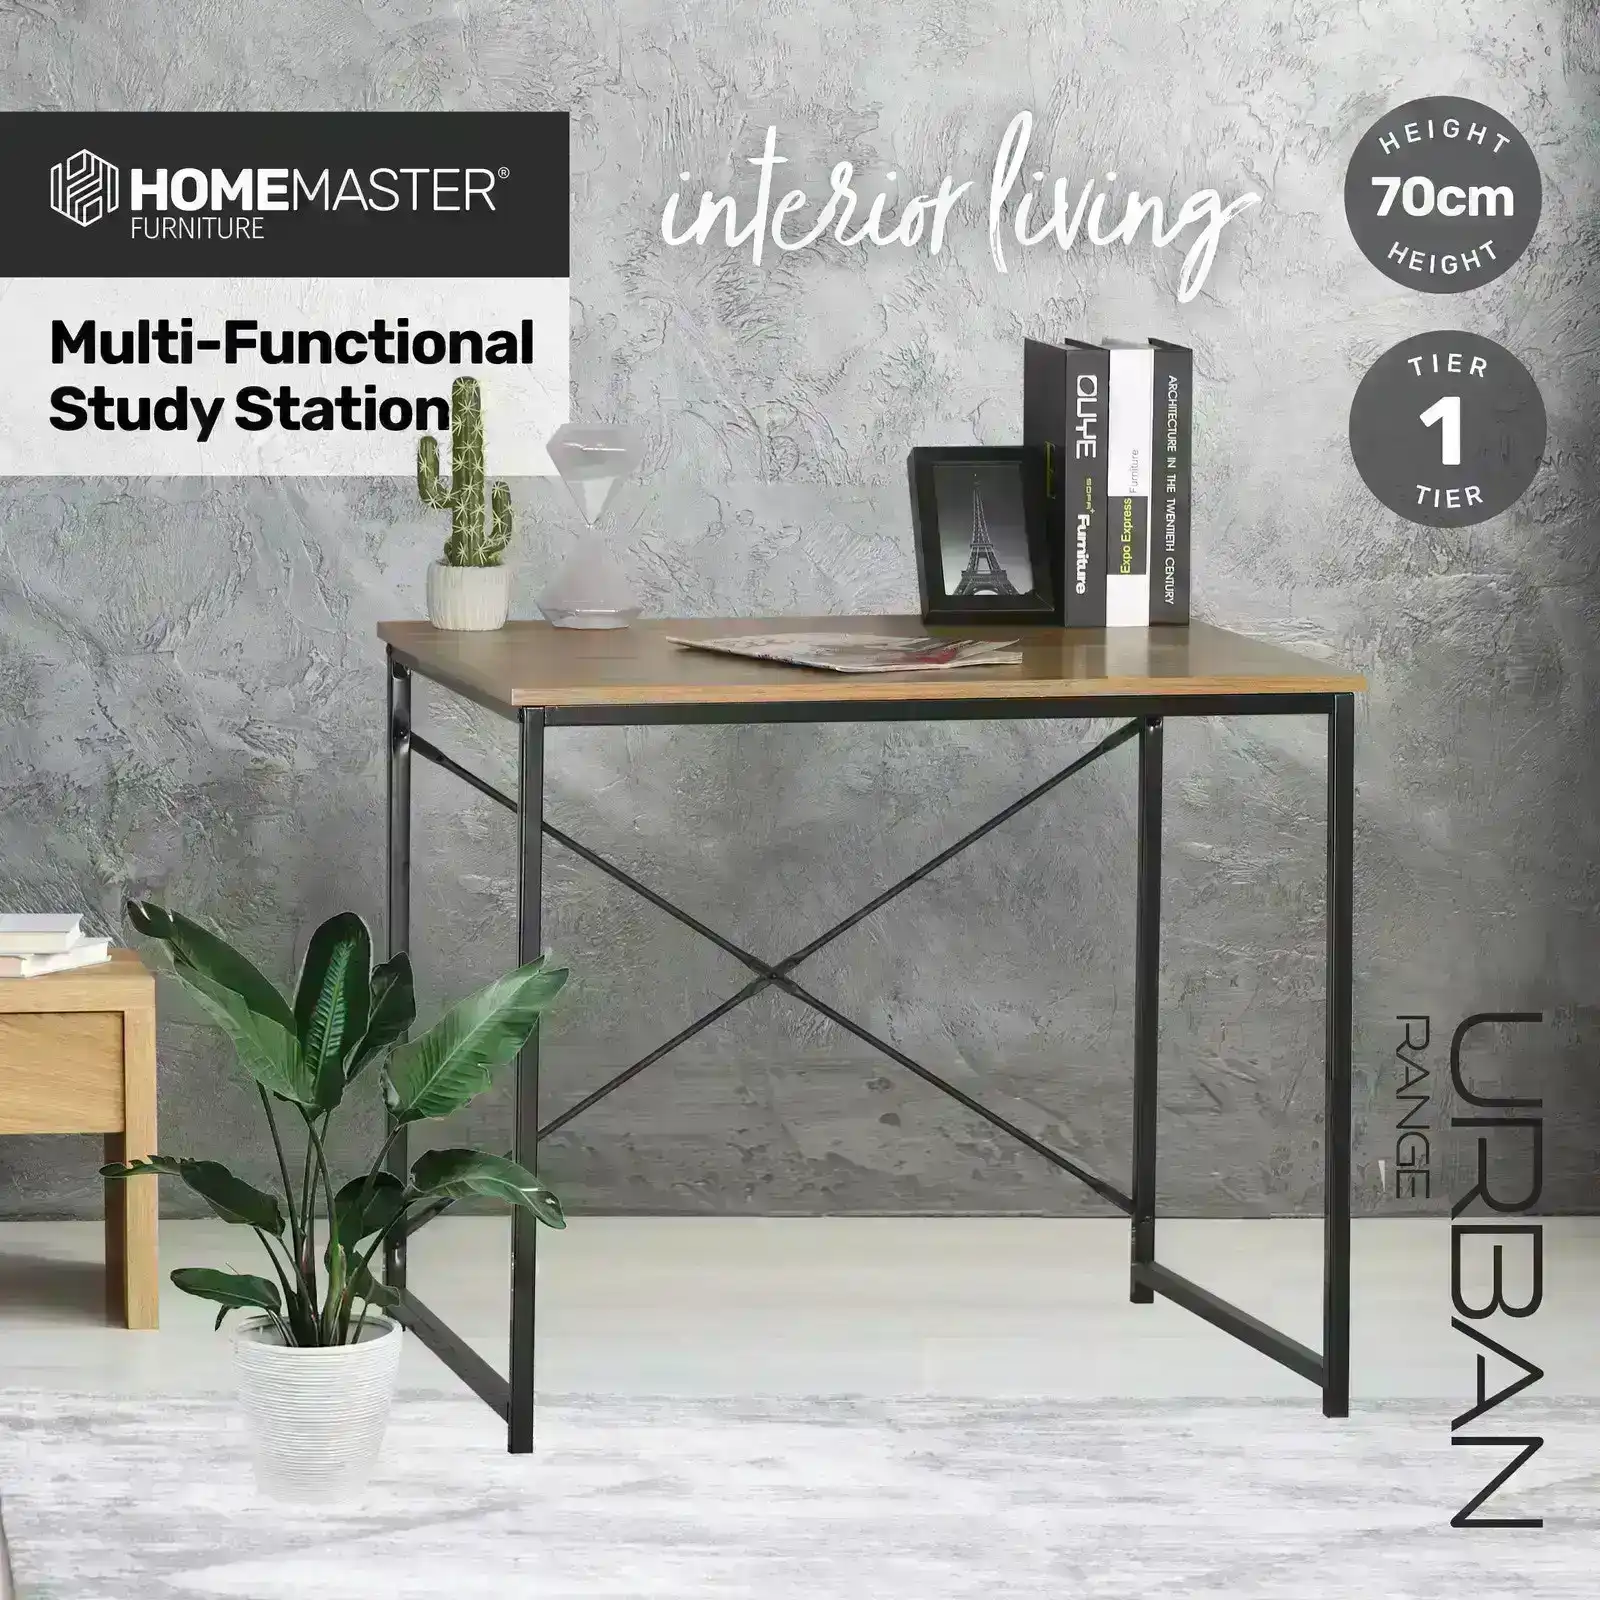 Home Master® Multifunctional Study Station Sleek Stylish Modern Design 70cm